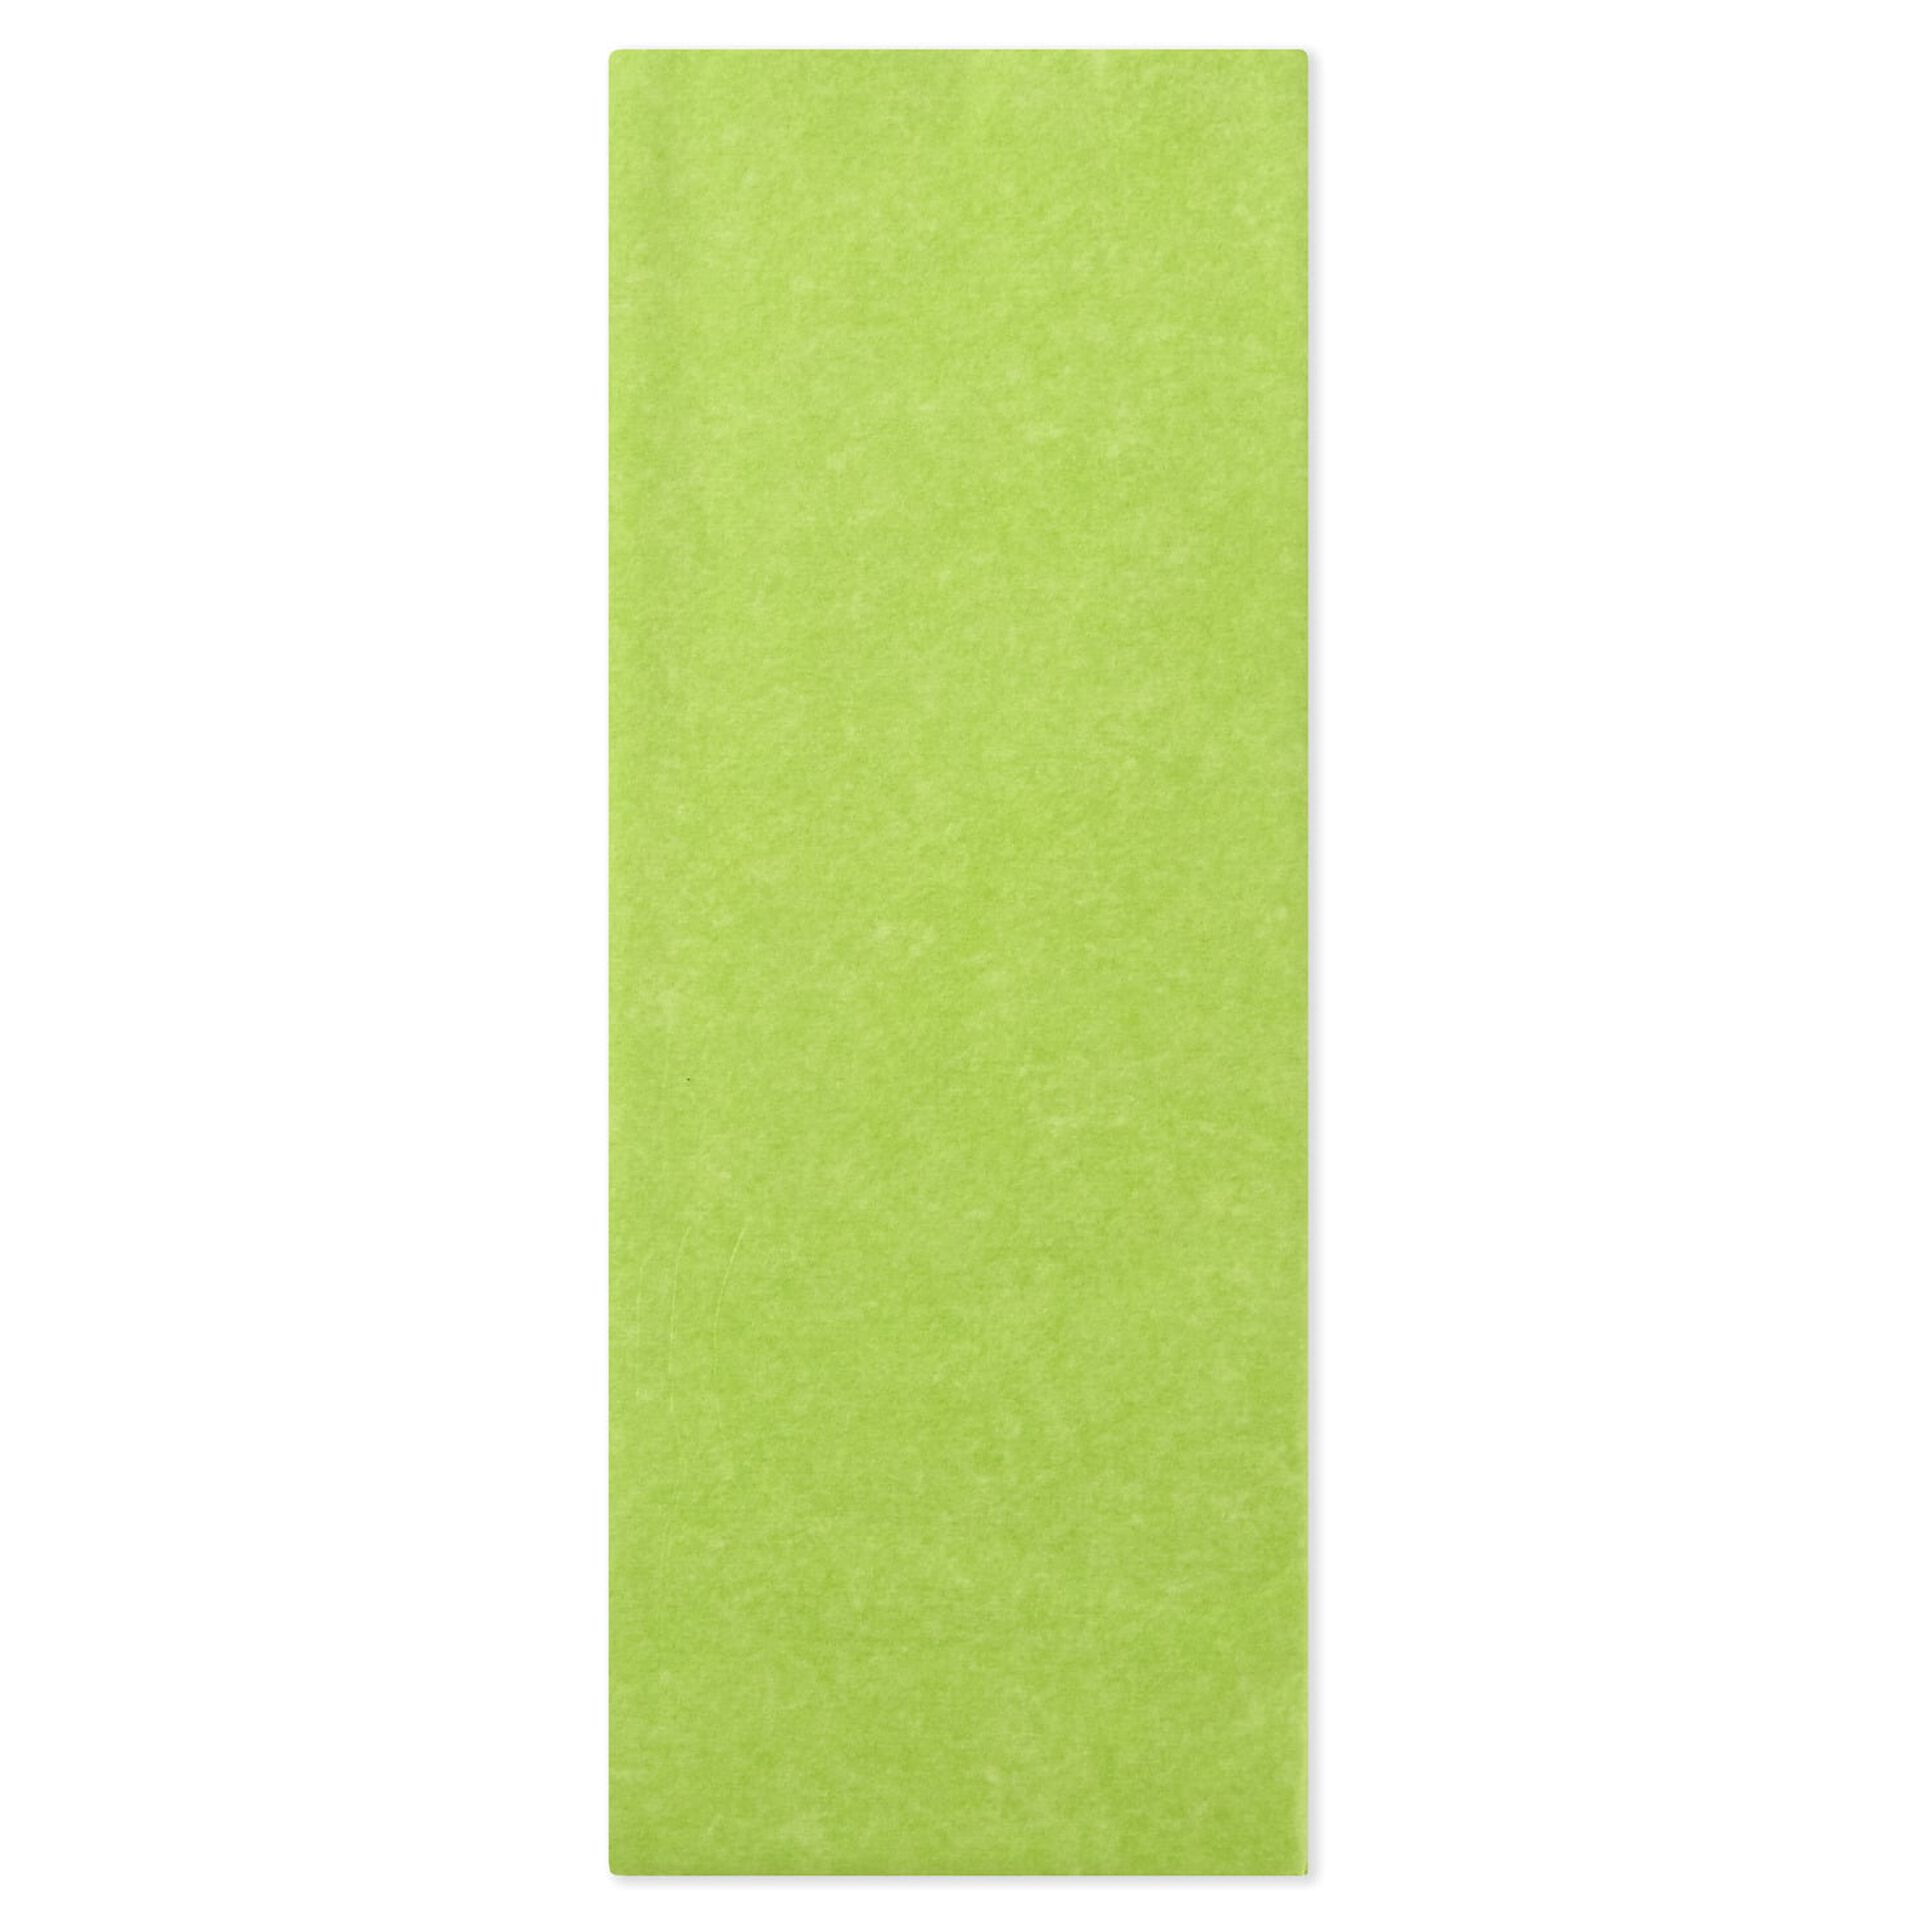 Lime Green Tissue Wrap